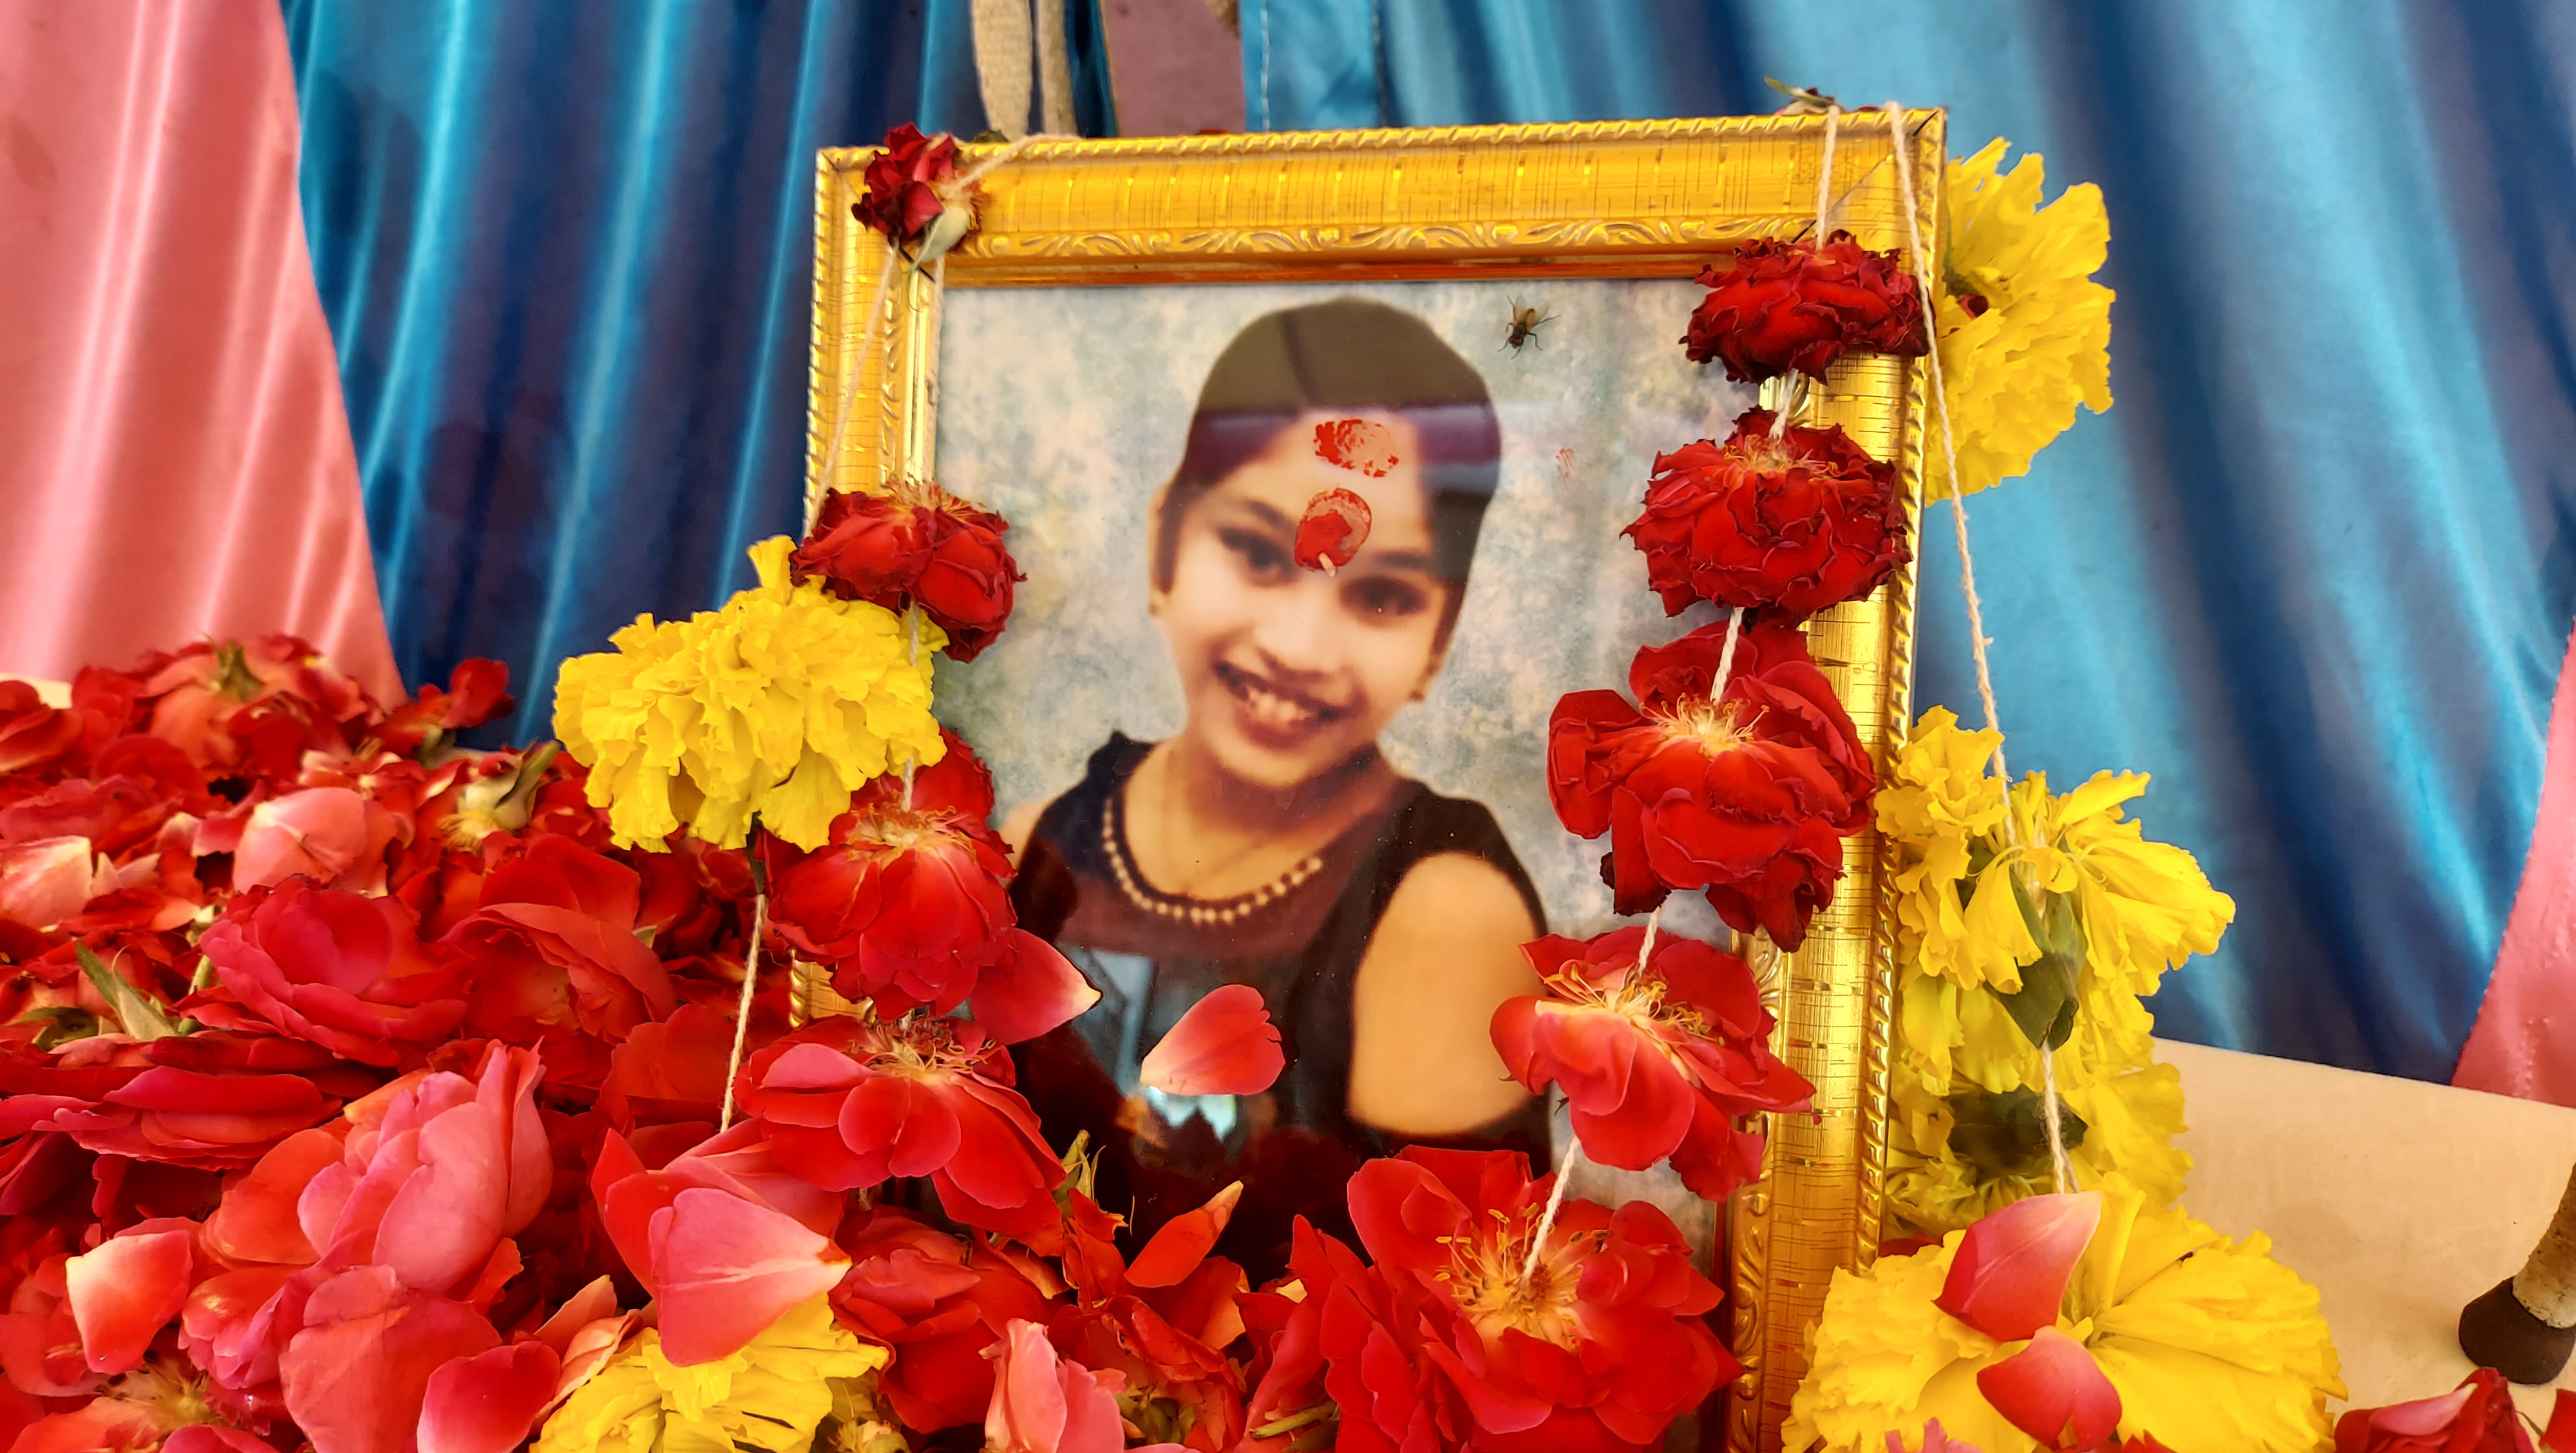 mp road take life of a little girl shreya vidisha